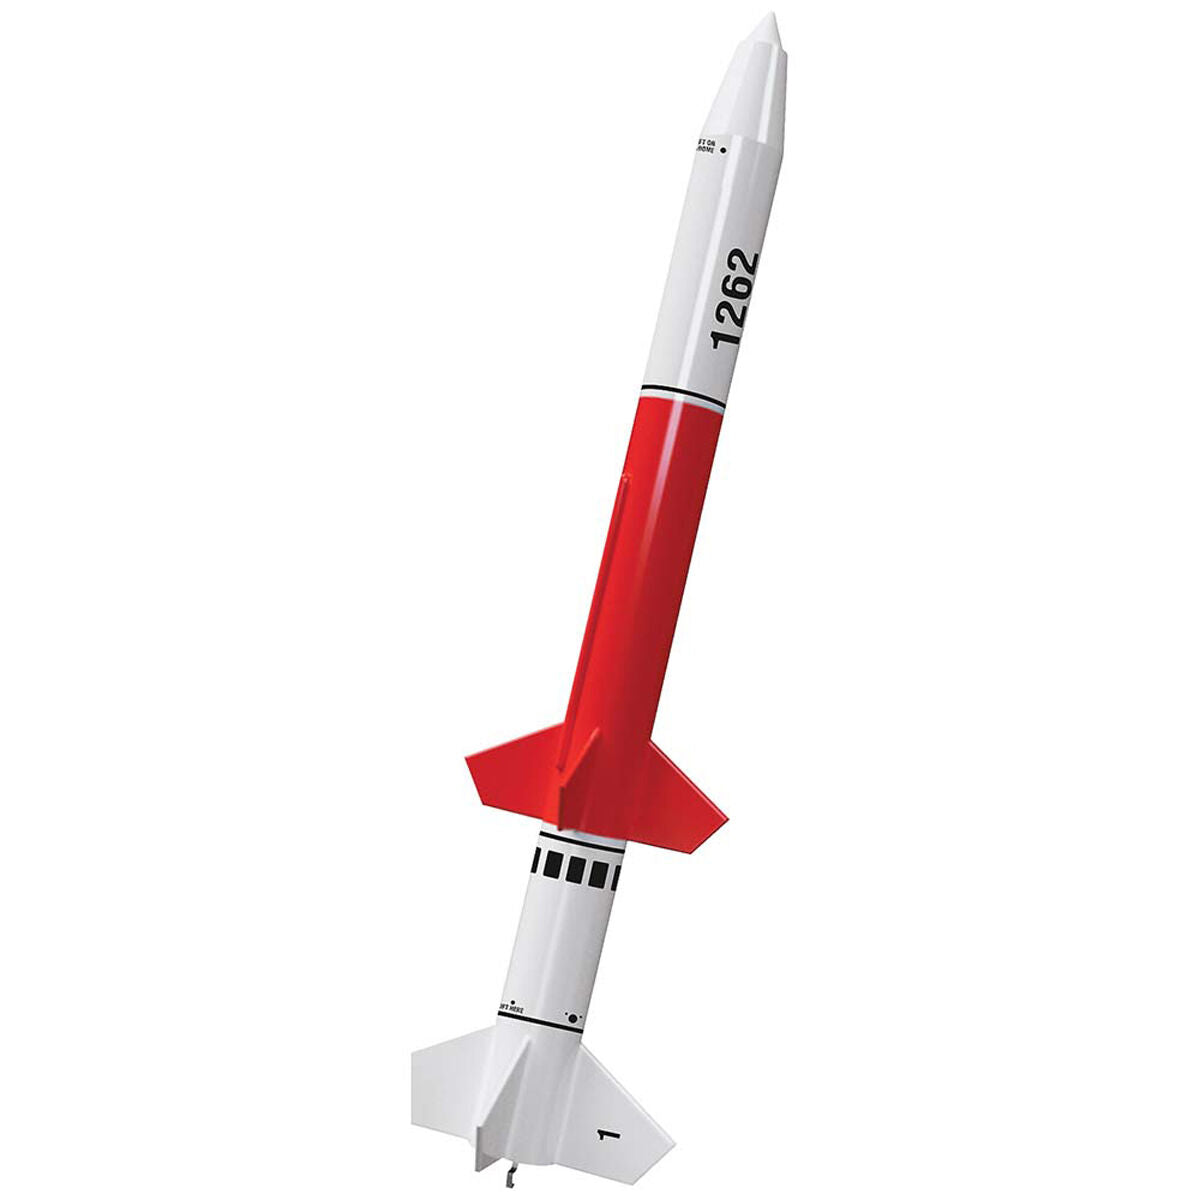 Red Nova Rocket Kit Skill Leve